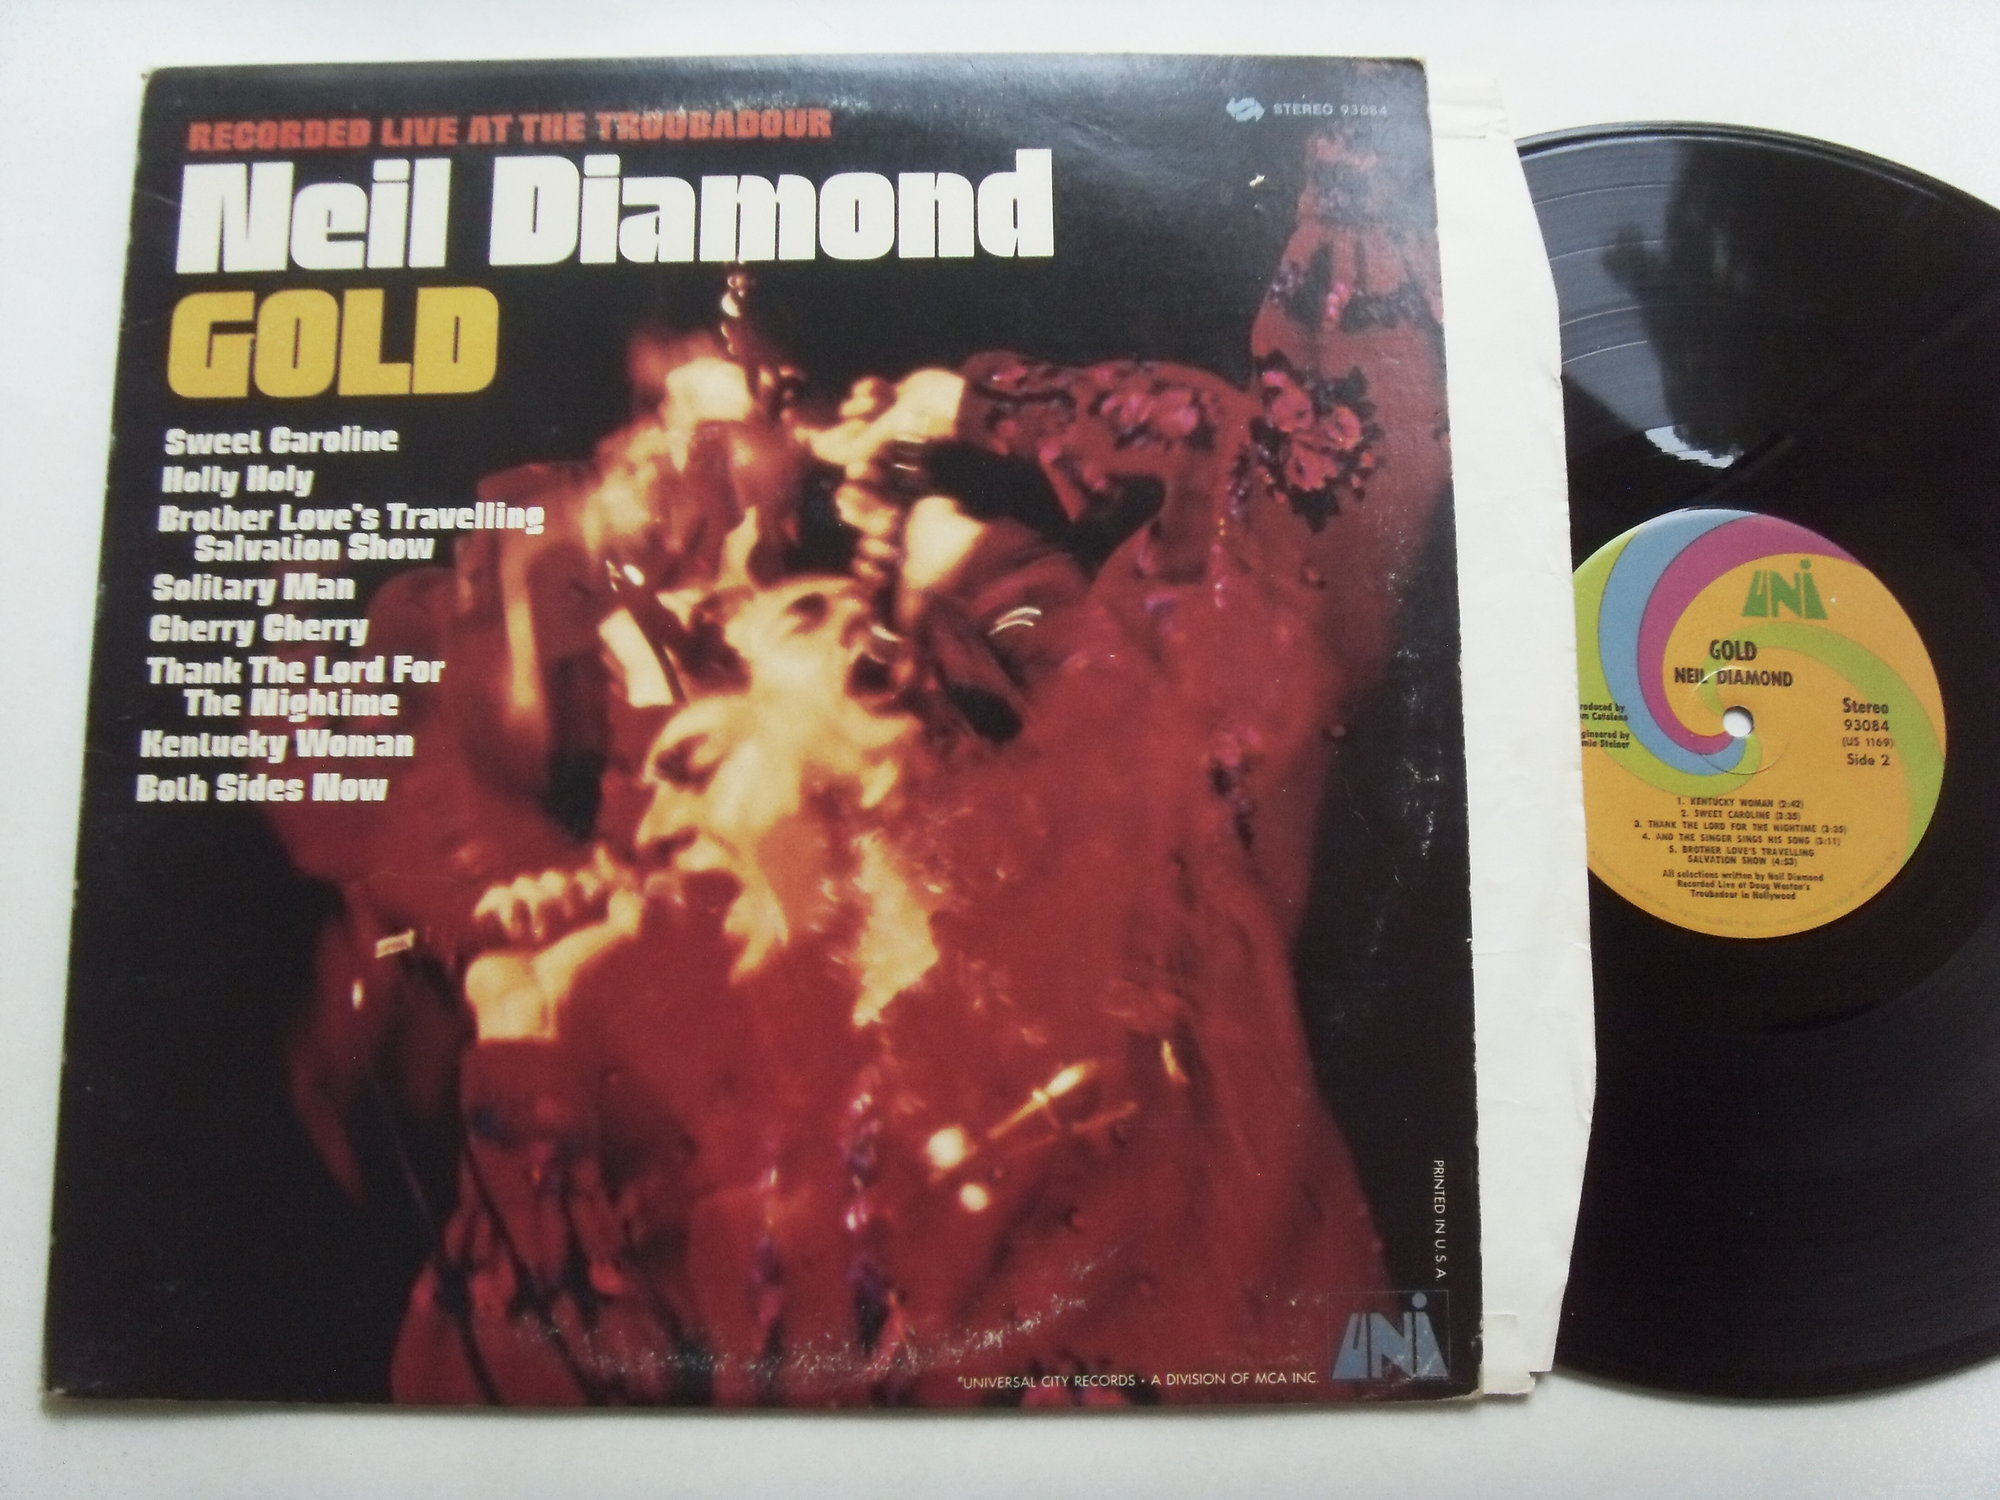 Neil DIAMOND Gold - recorder live at the Troubadour